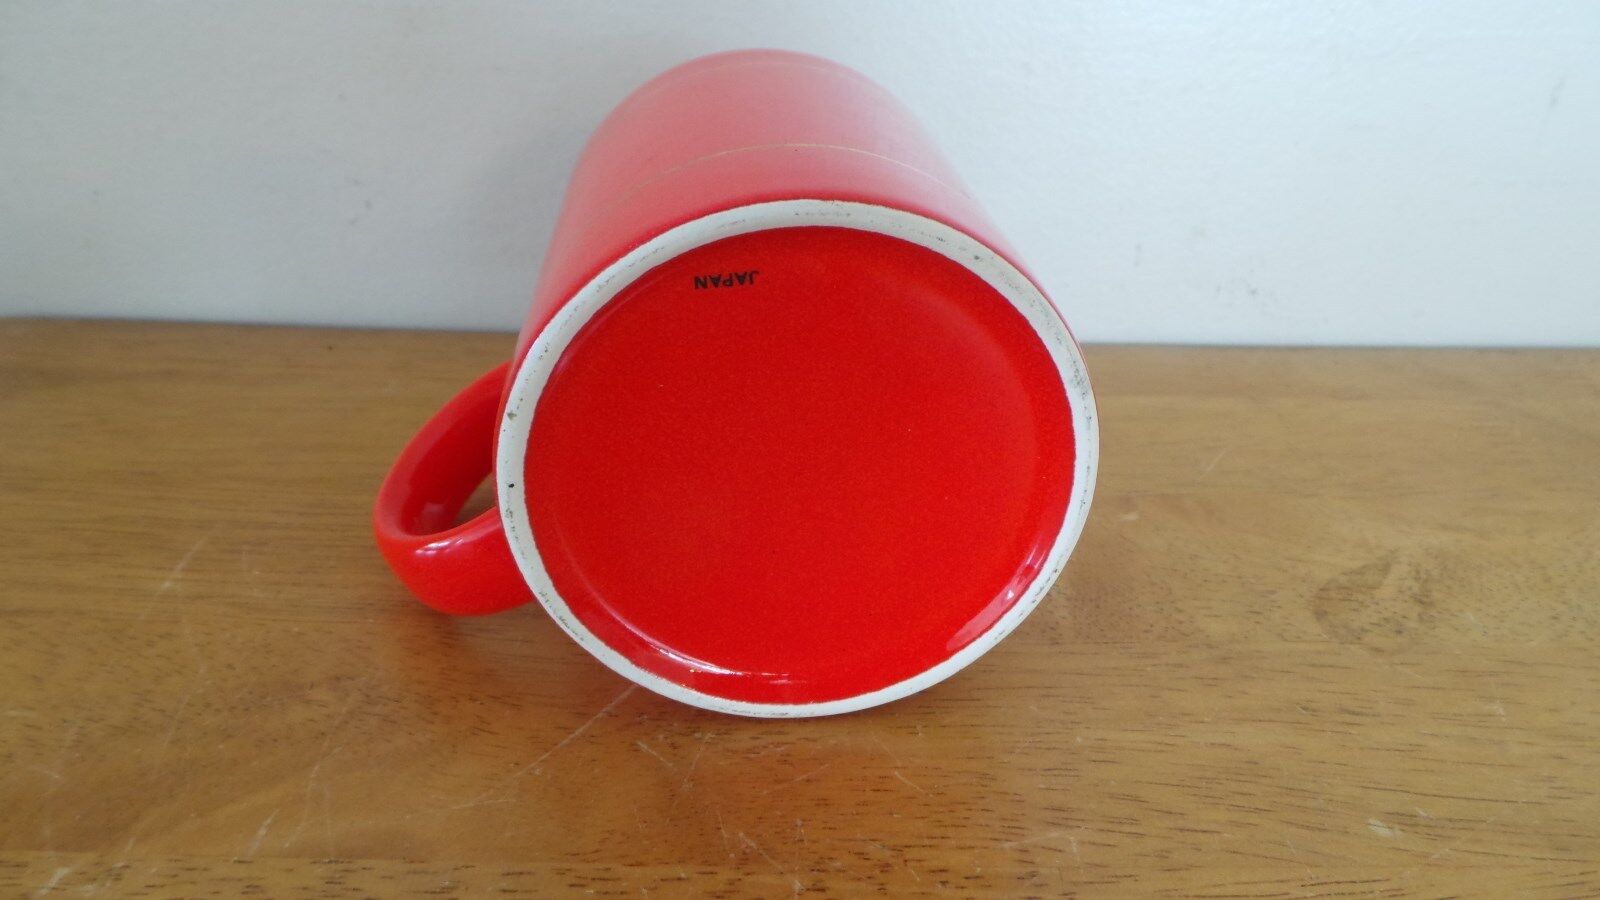 Rare Vintage 1980's Instant MAXWELL HOUSE Coffee Cup/Mug 12 oz. Japan ~ Red Без бренда - фотография #5